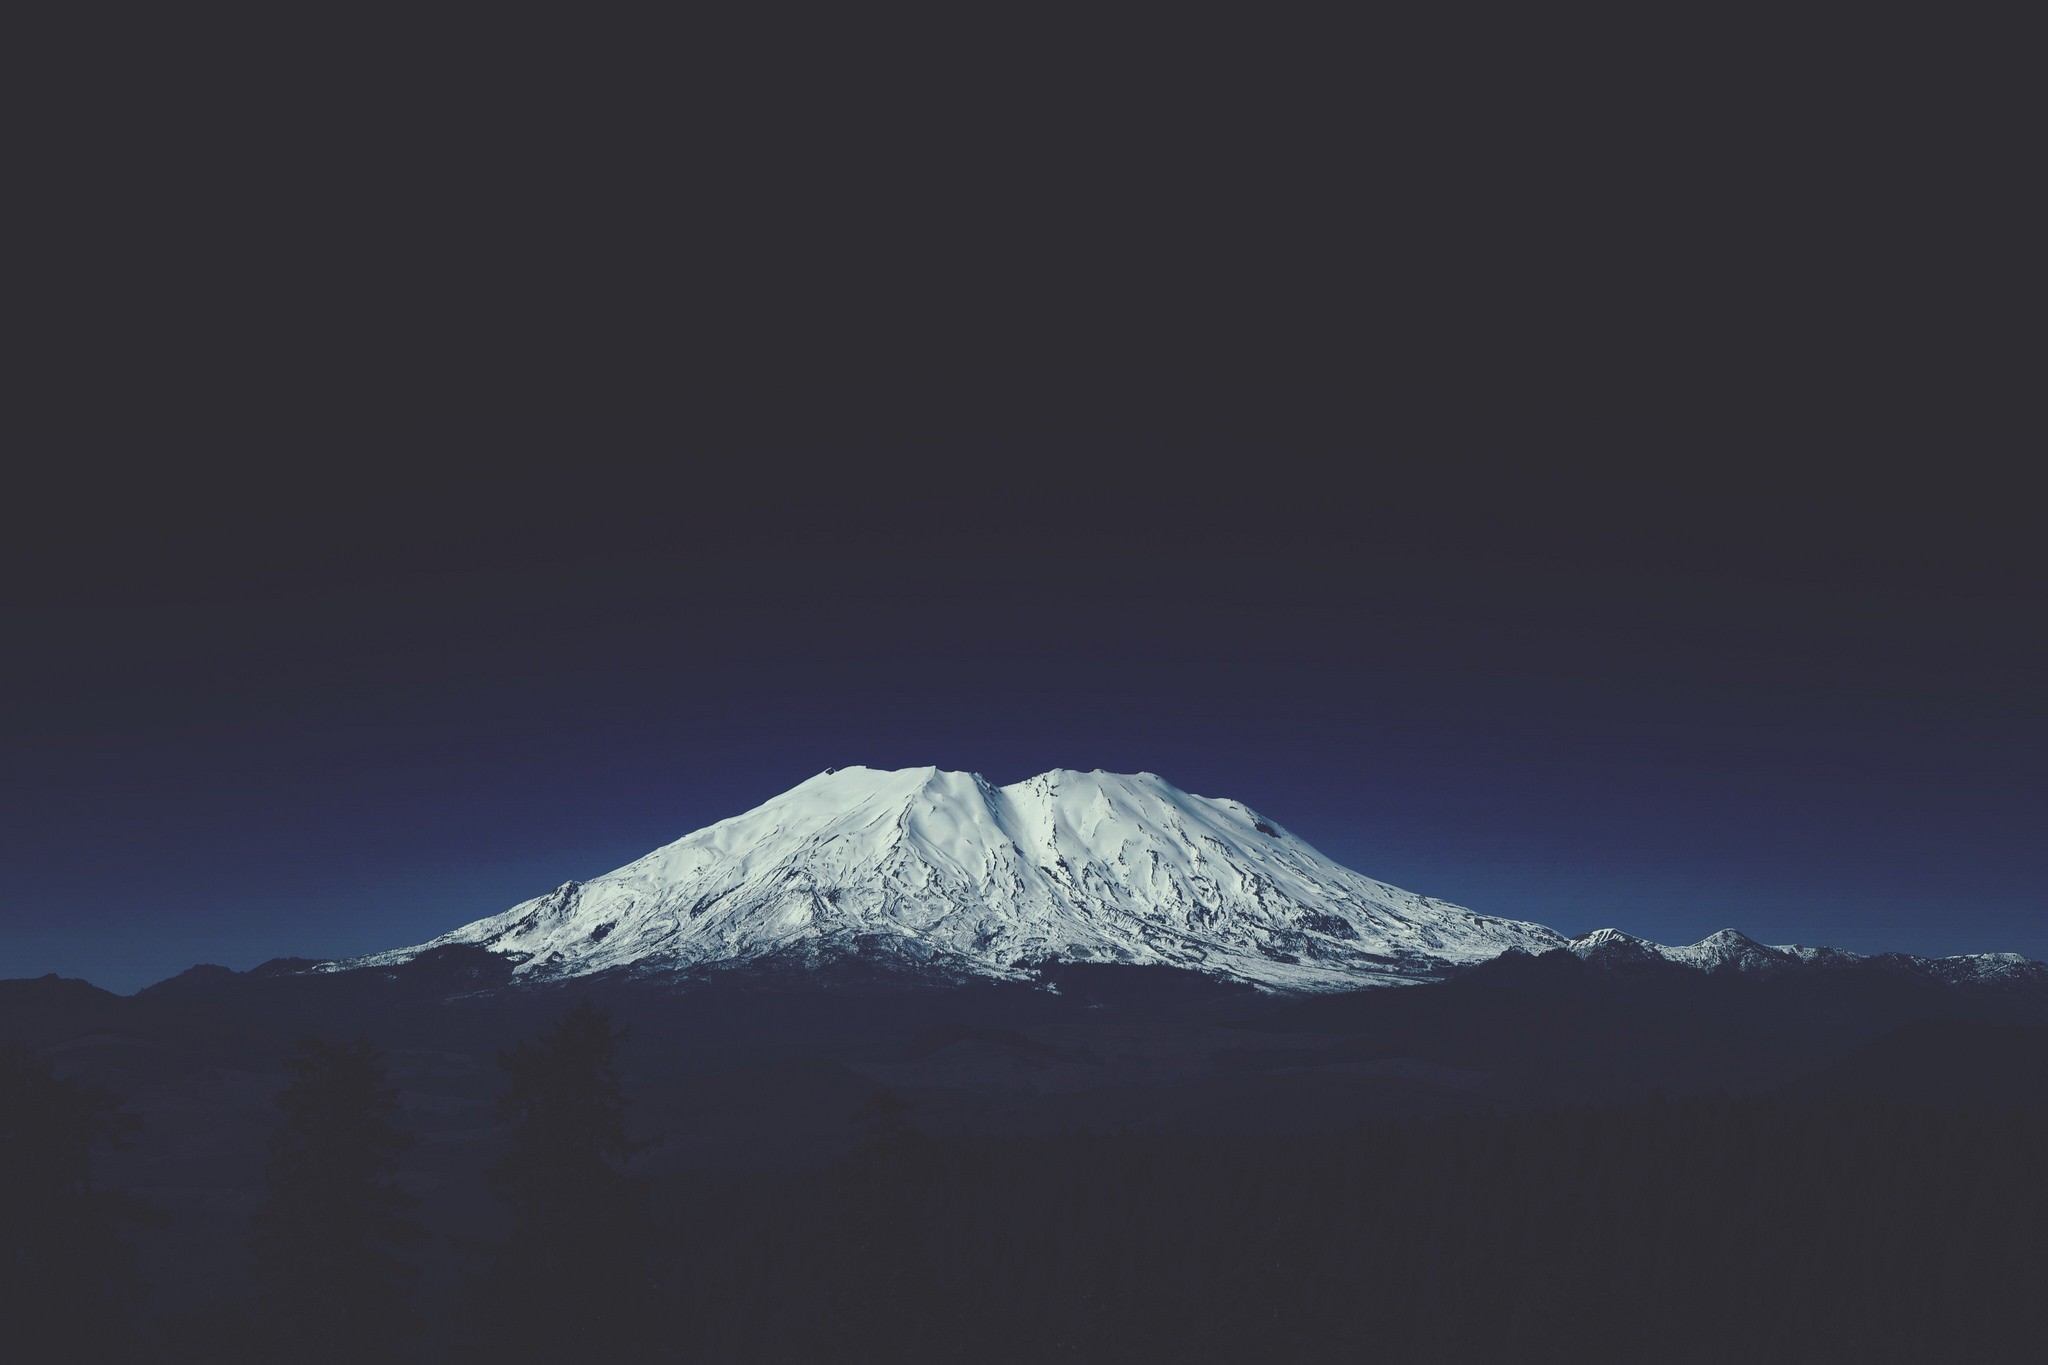 General 2048x1365 nature mountains volcano night snowy peak landscape